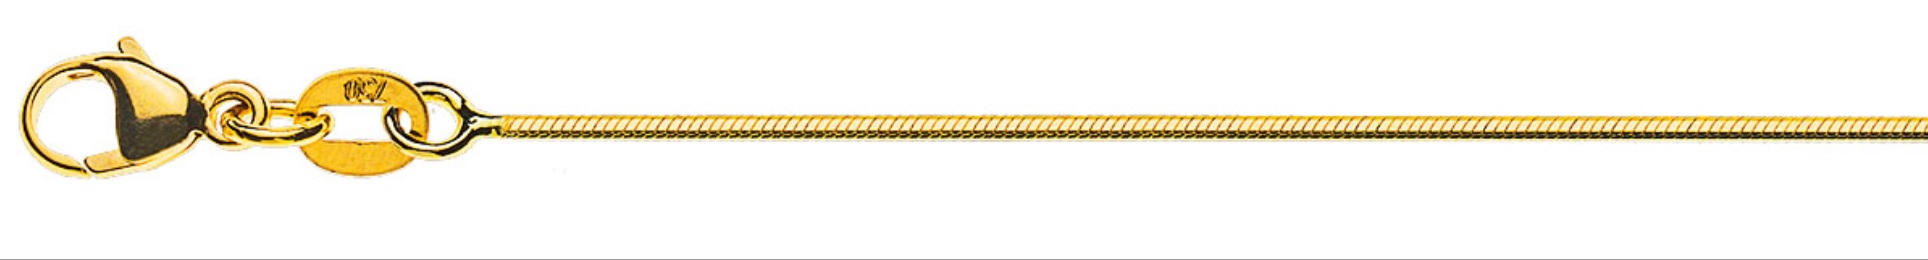 AURONOS Prestige Necklace yellow gold 18K snake chain diamond 42cm 1.0mm